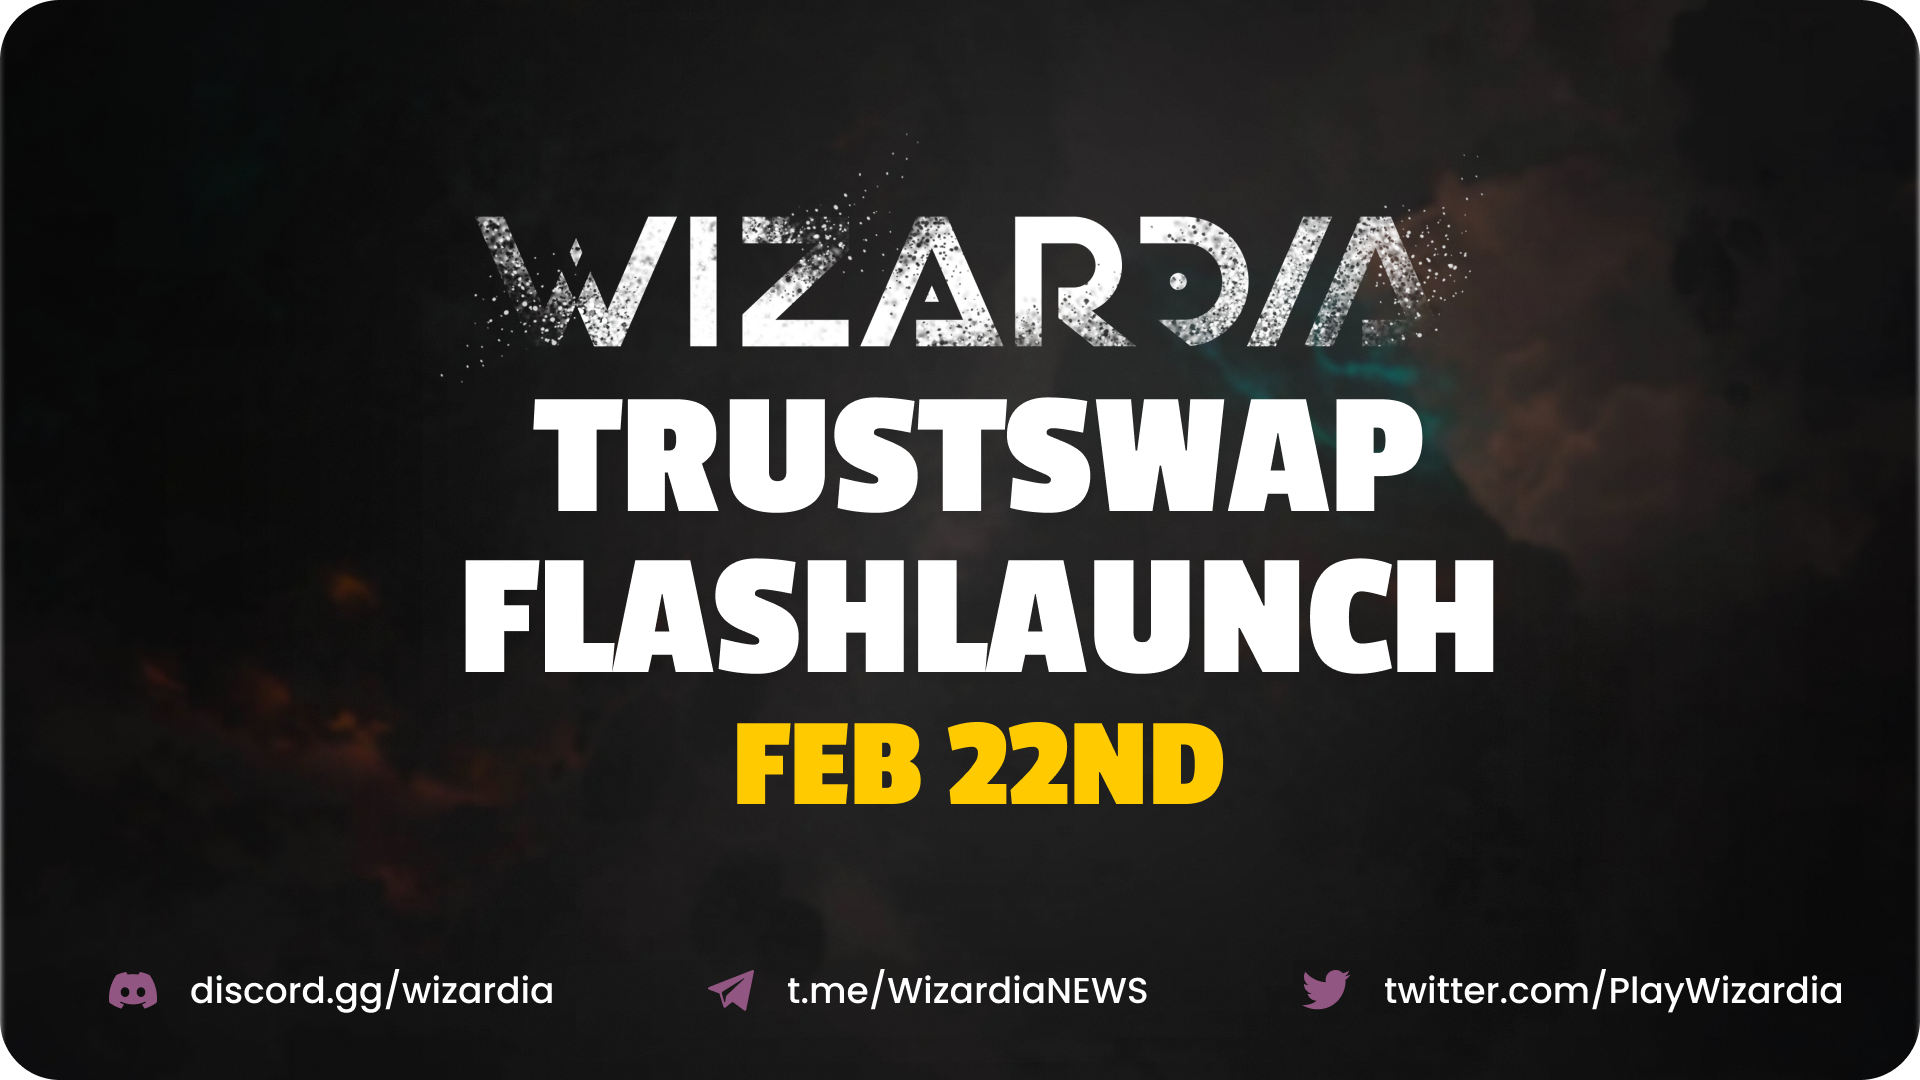 Wizardia Announces Feb. 22nd FlashLaunch With TrustSwap